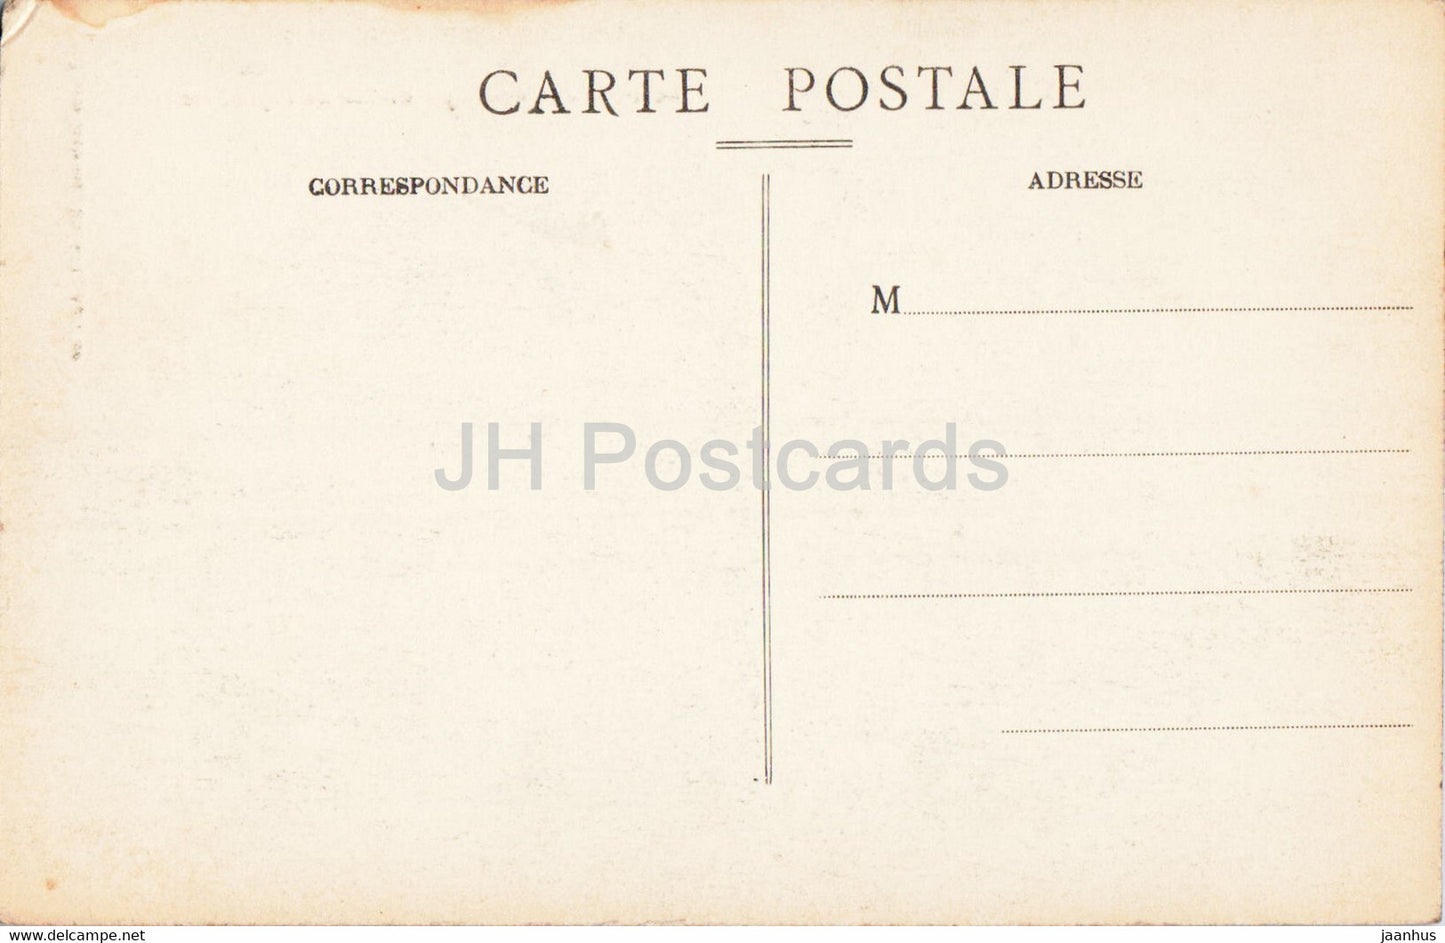 Nos Montagnes - Environs du Puy Mary - Rocher de Peyre Ass - 1854 - alte Postkarte - Frankreich - unbenutzt